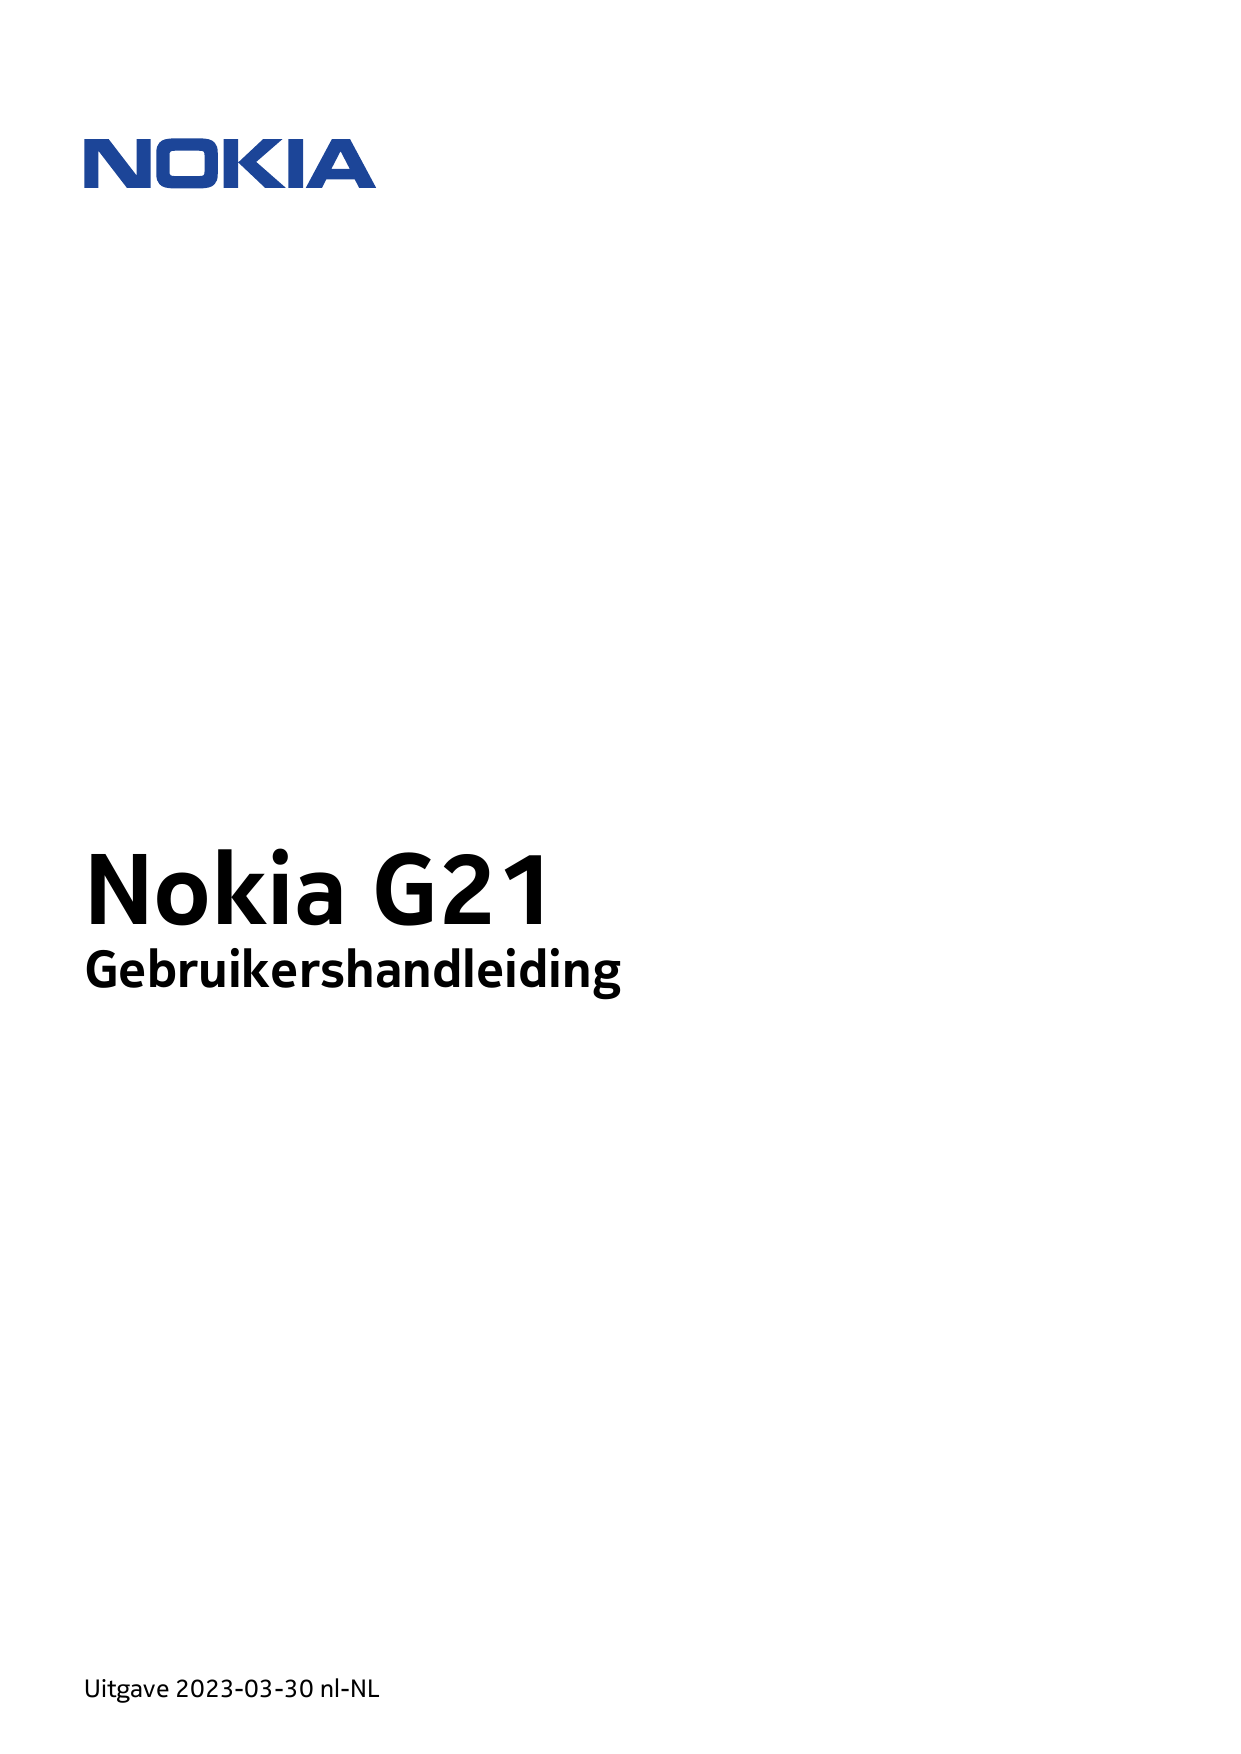 Nokia G21GebruikershandleidingUitgave 2023-03-30 nl-NL